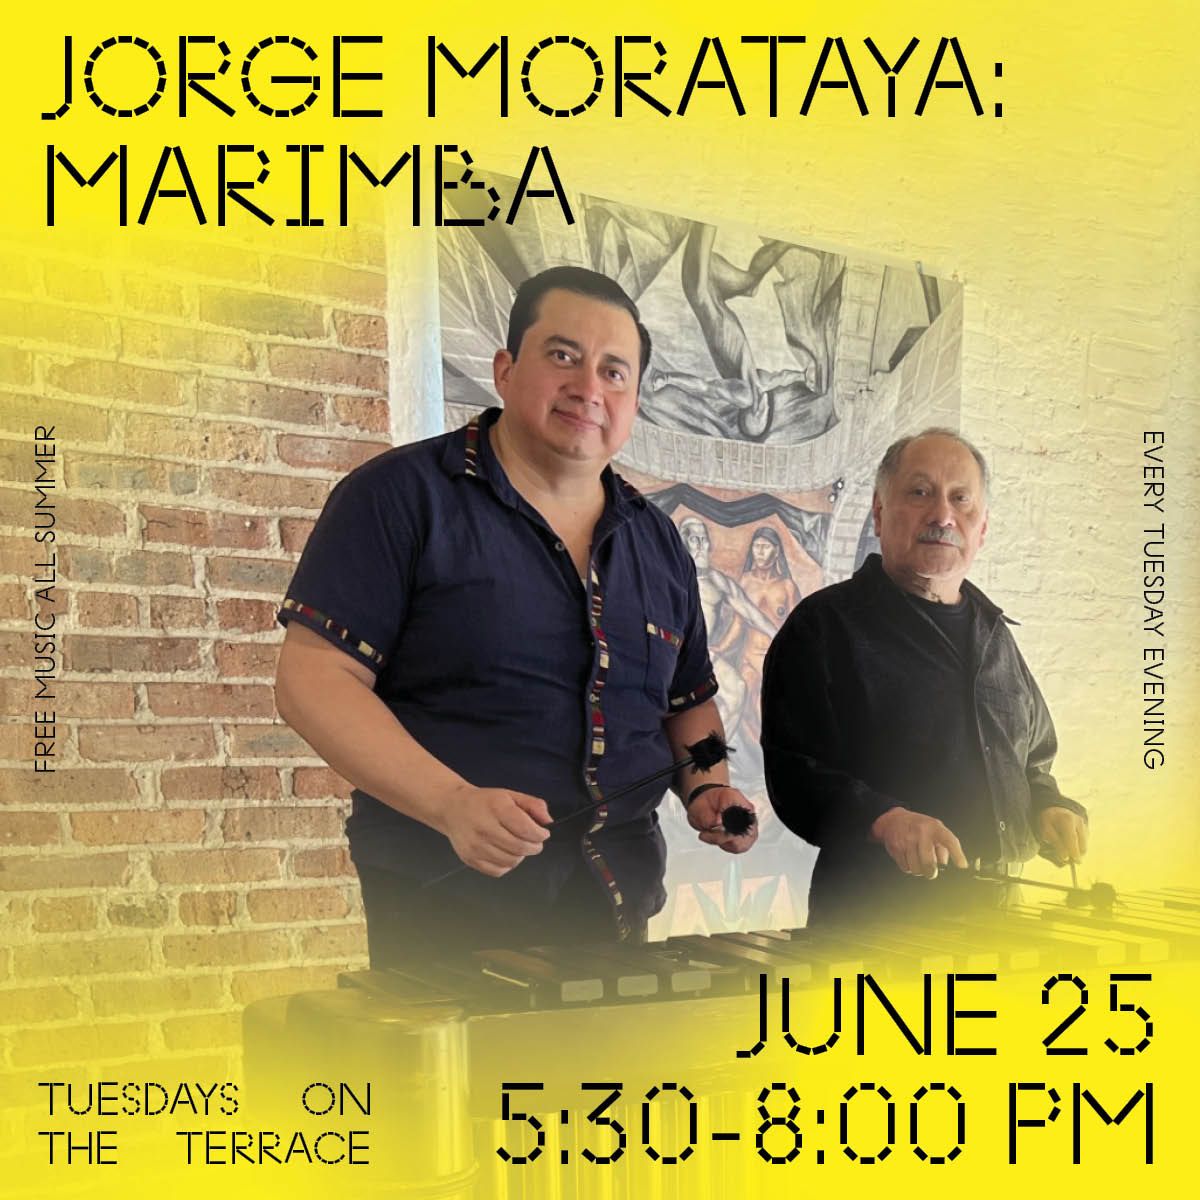 Tuesdays on the Terrace | Jorge Morataya-Marimba